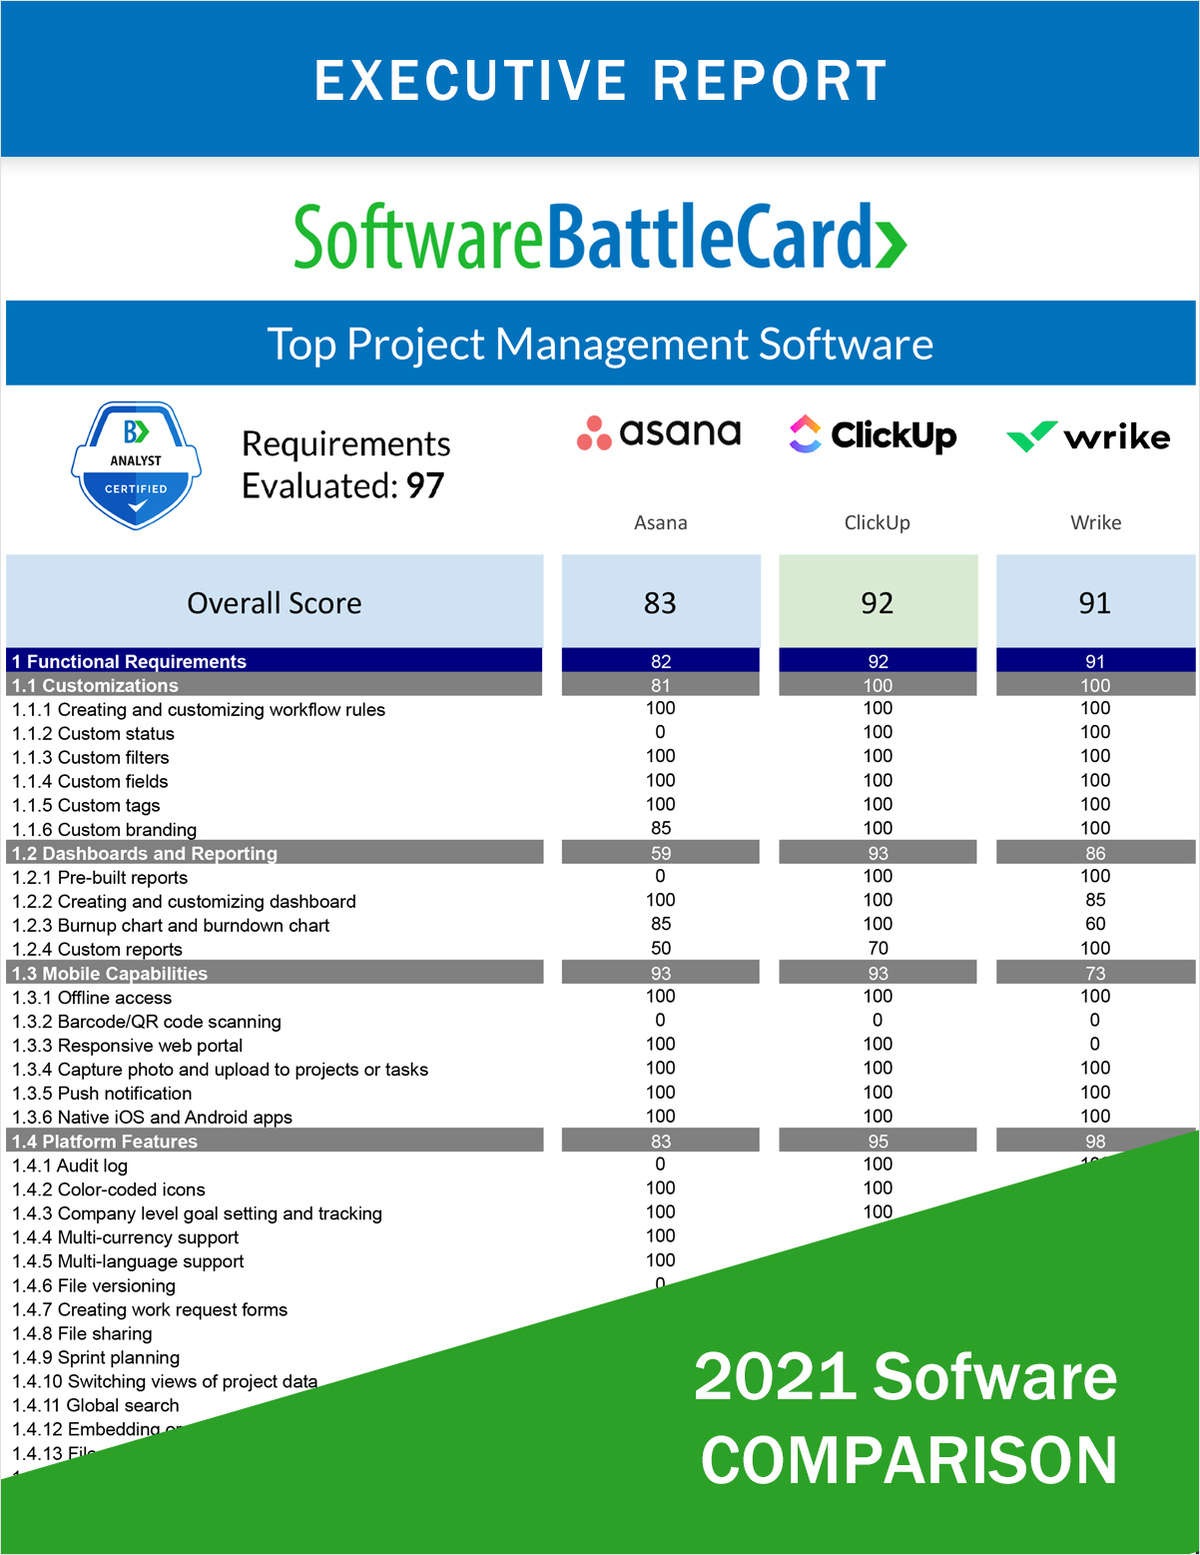 Top Project Management Software BattleCard--Asana vs. ClickUp vs. Wrike